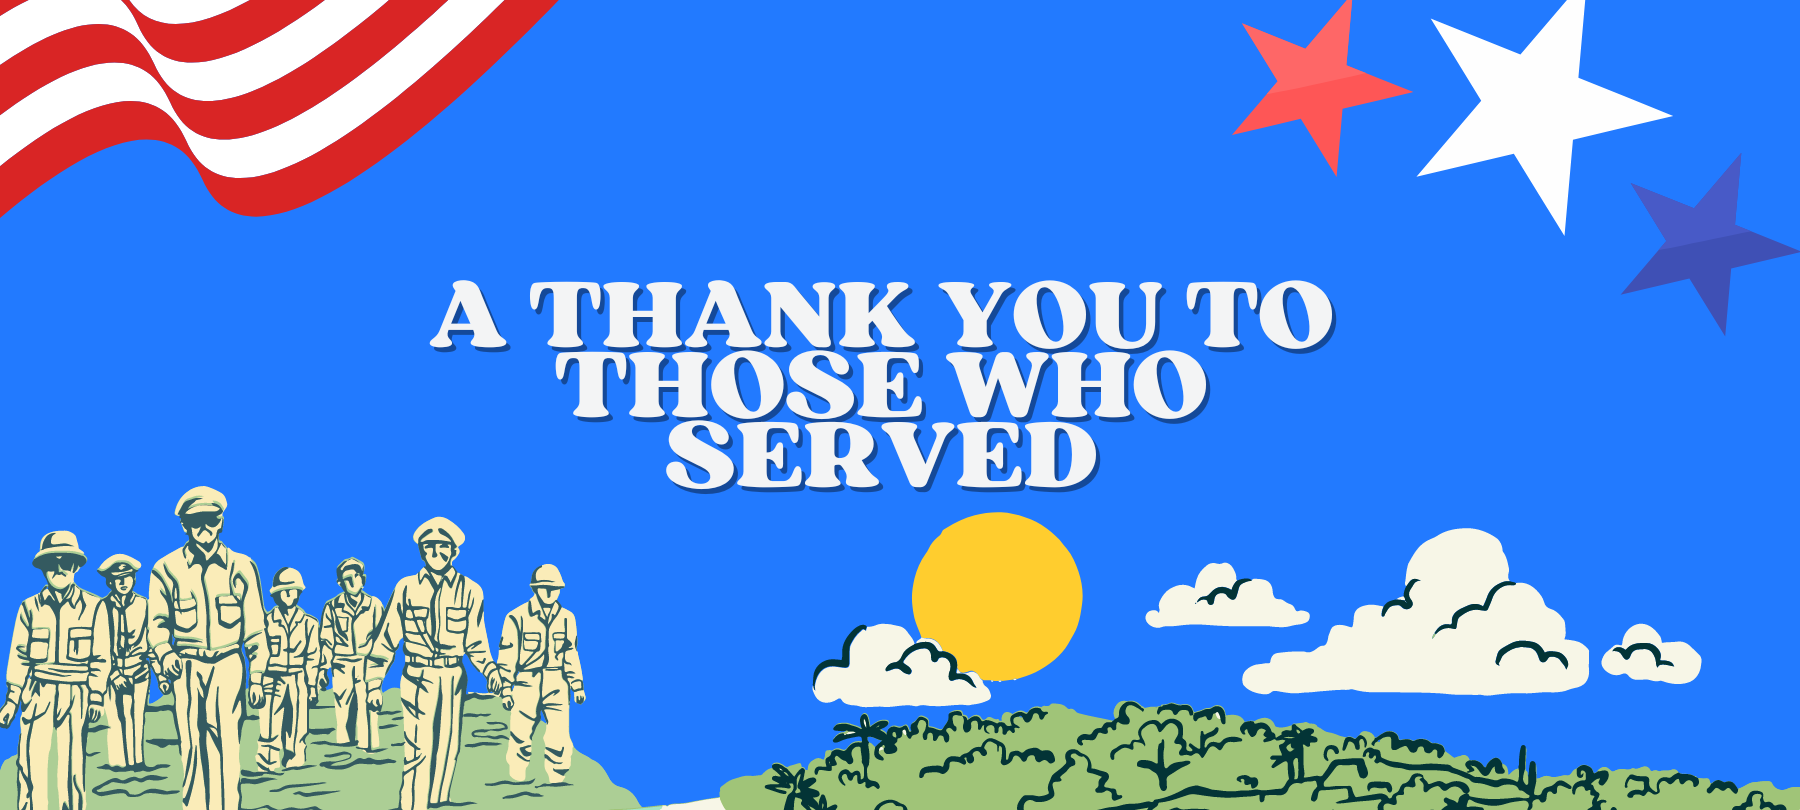 Thank you to those who serve